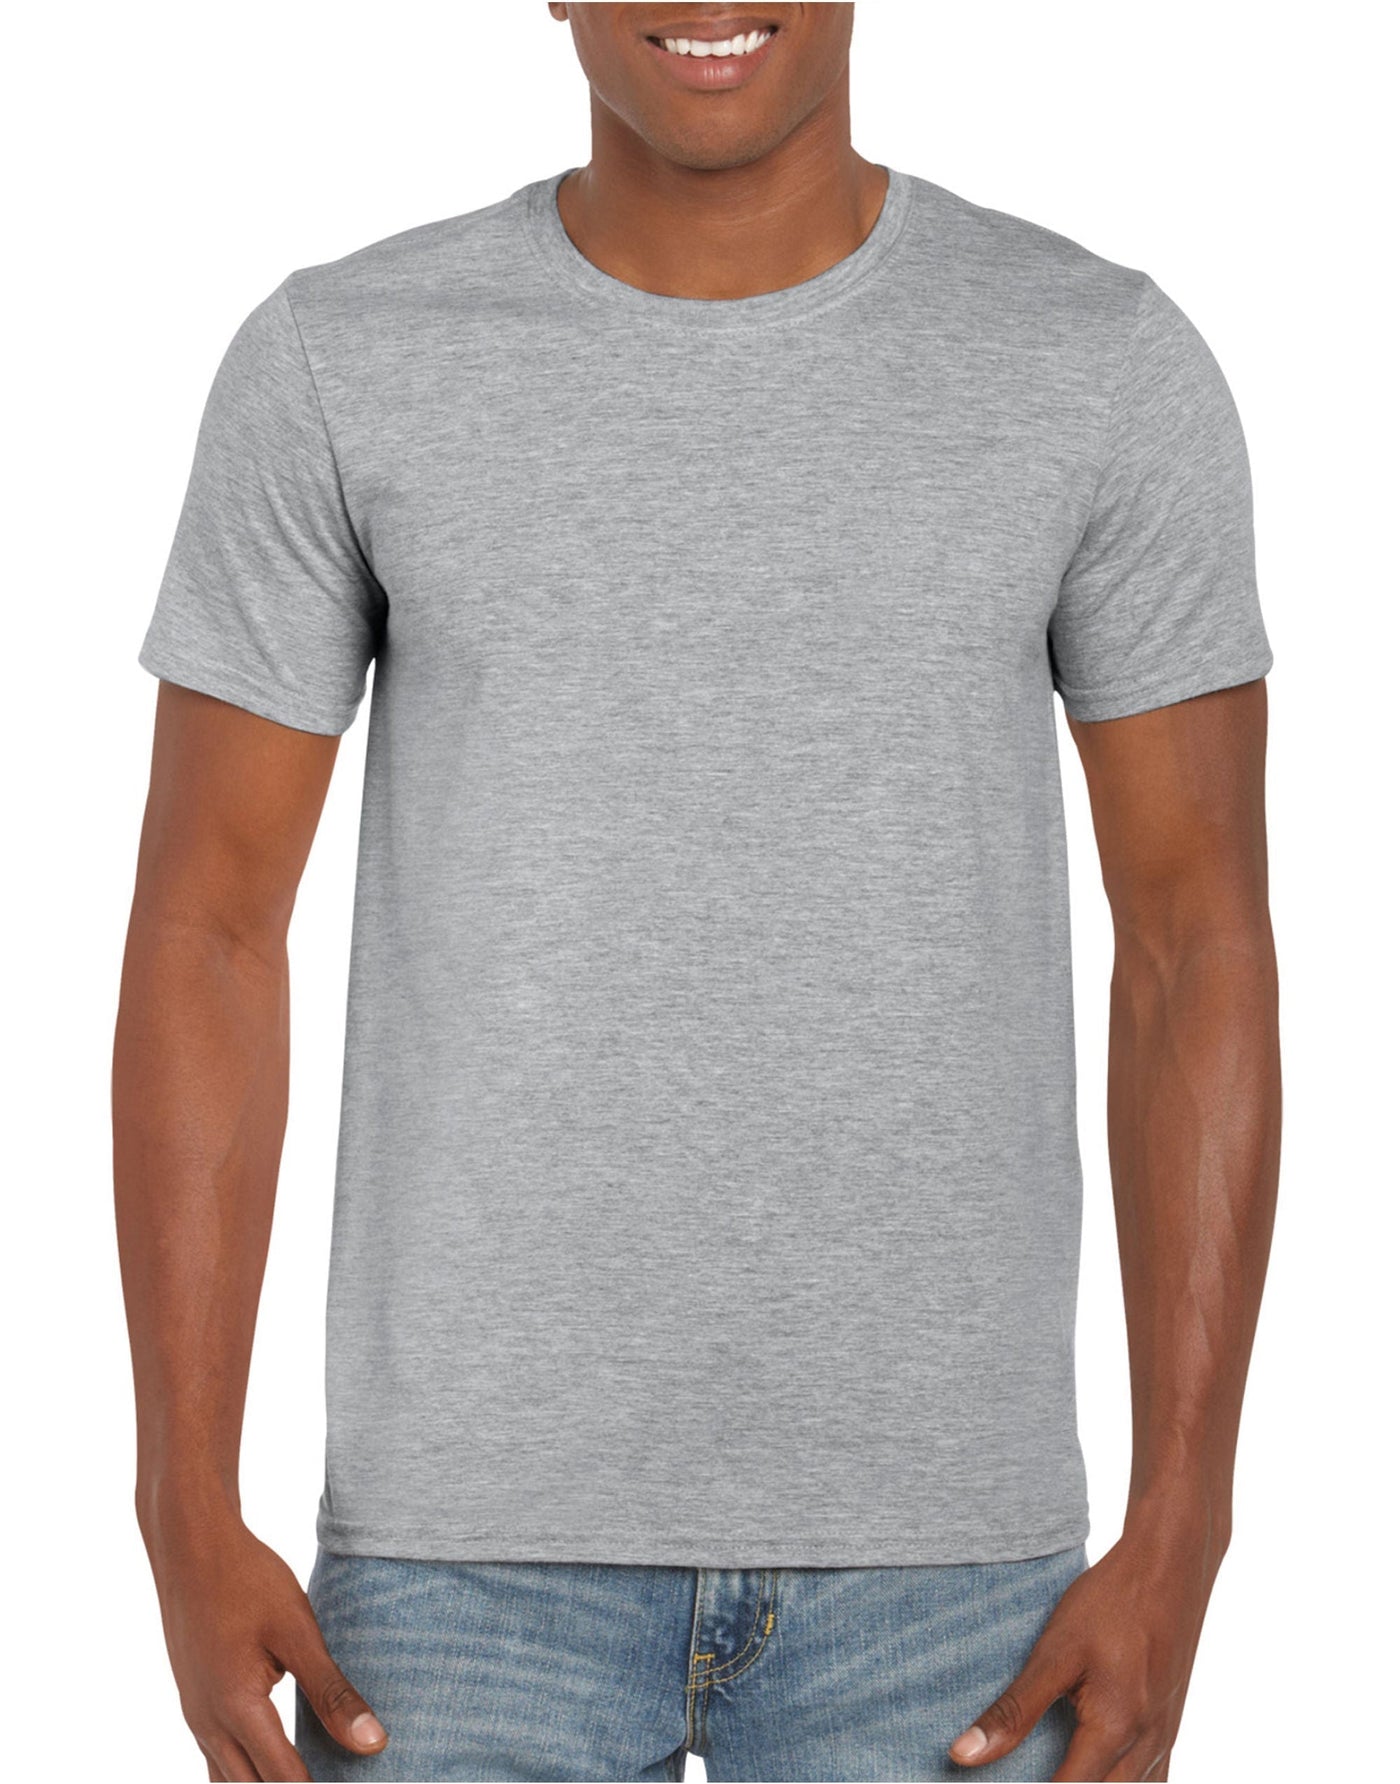 Men's Sports Grey T-Shirt